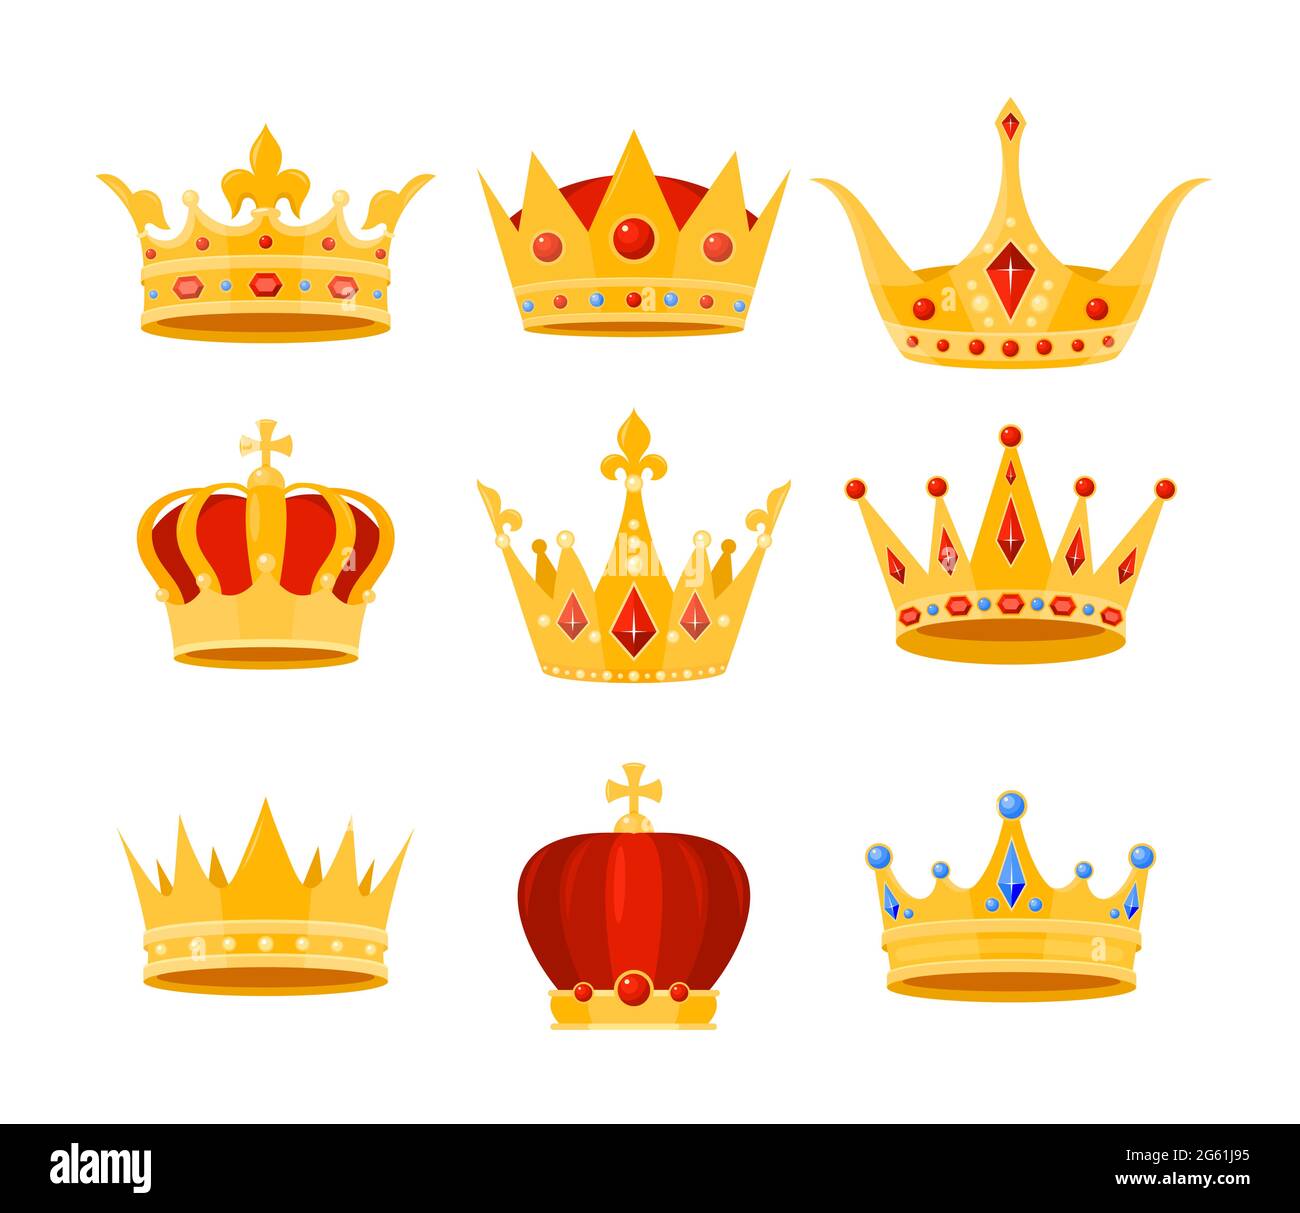 Download Corona Rey Realeza Royalty-Free Stock Illustration Image